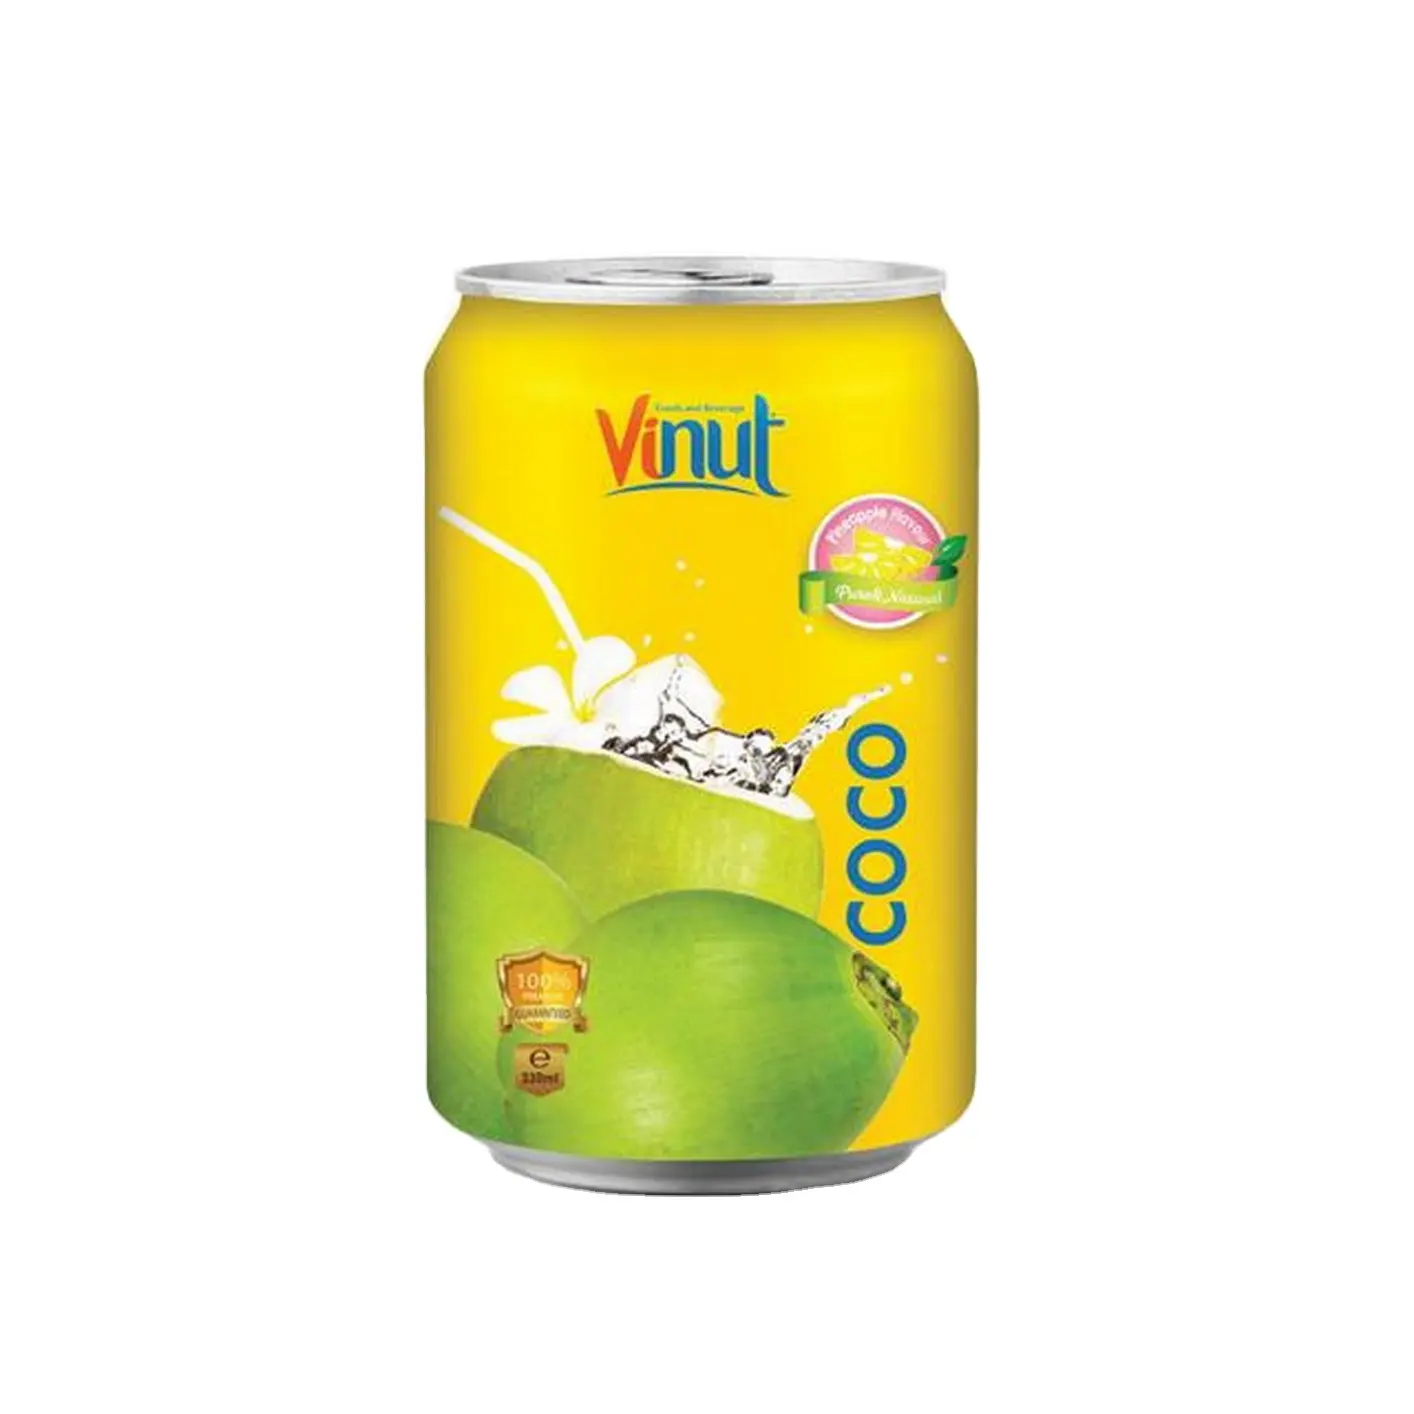 VINUT Can (estañado), 330ml, agua de coco con piña, servicio de etiqueta privada, empresa de baja sal en Vietnam